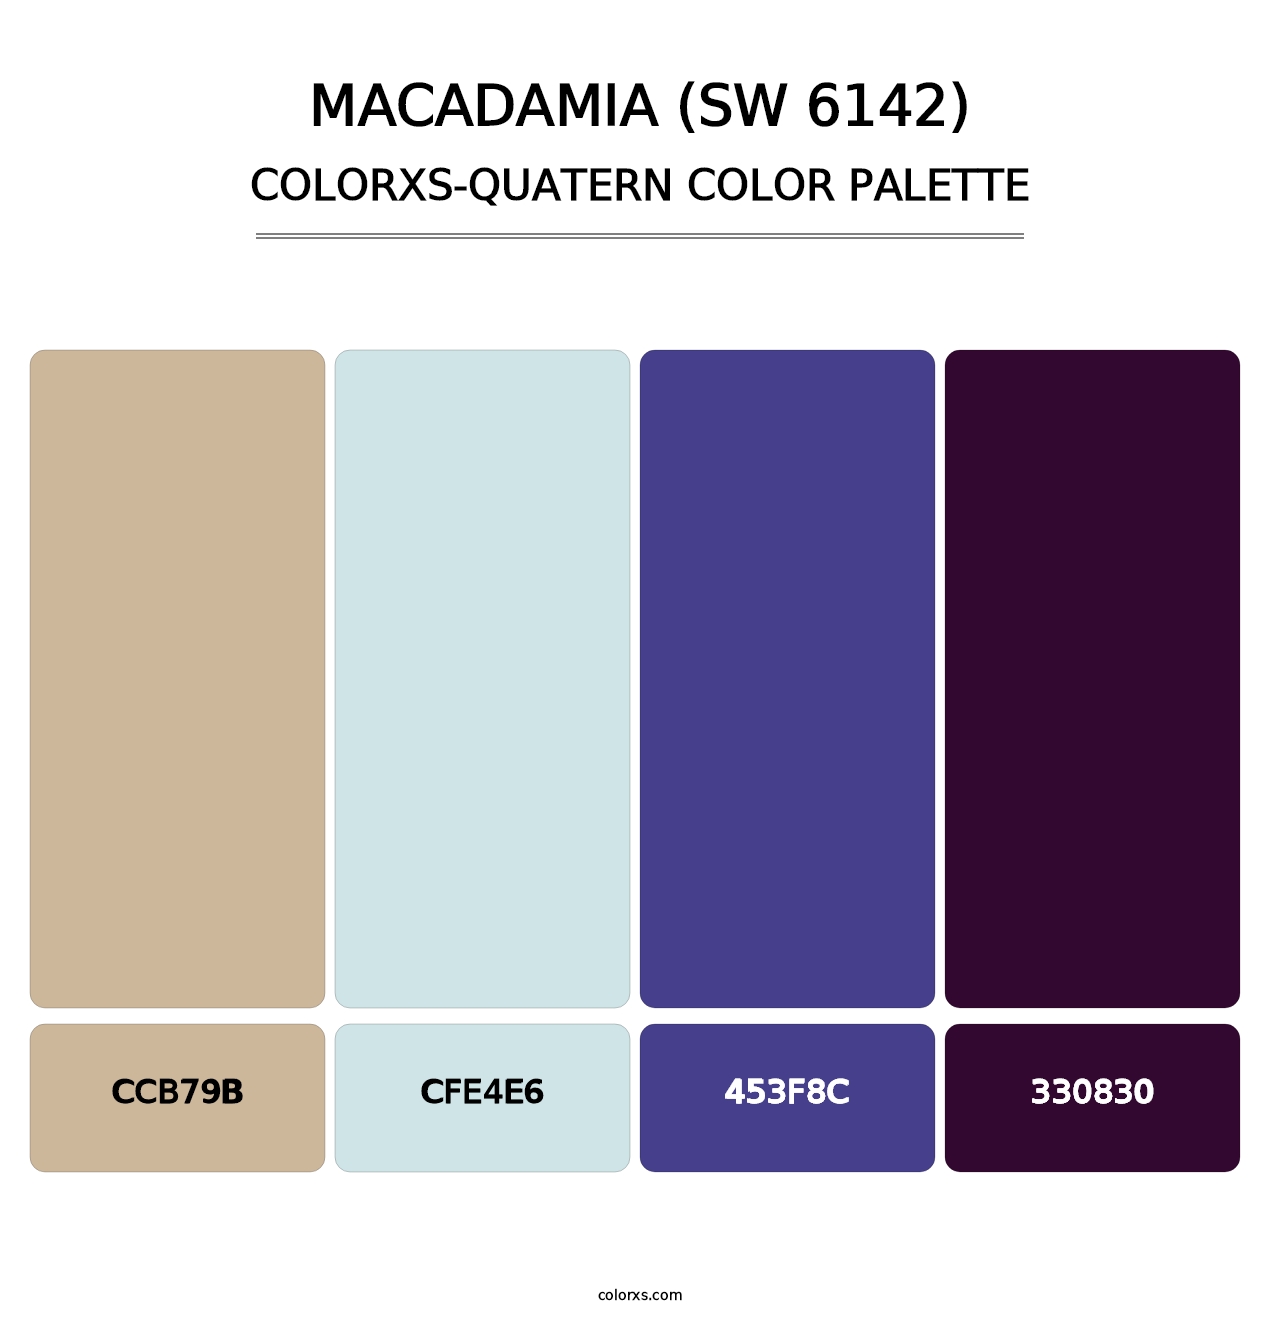 Macadamia (SW 6142) - Colorxs Quatern Palette